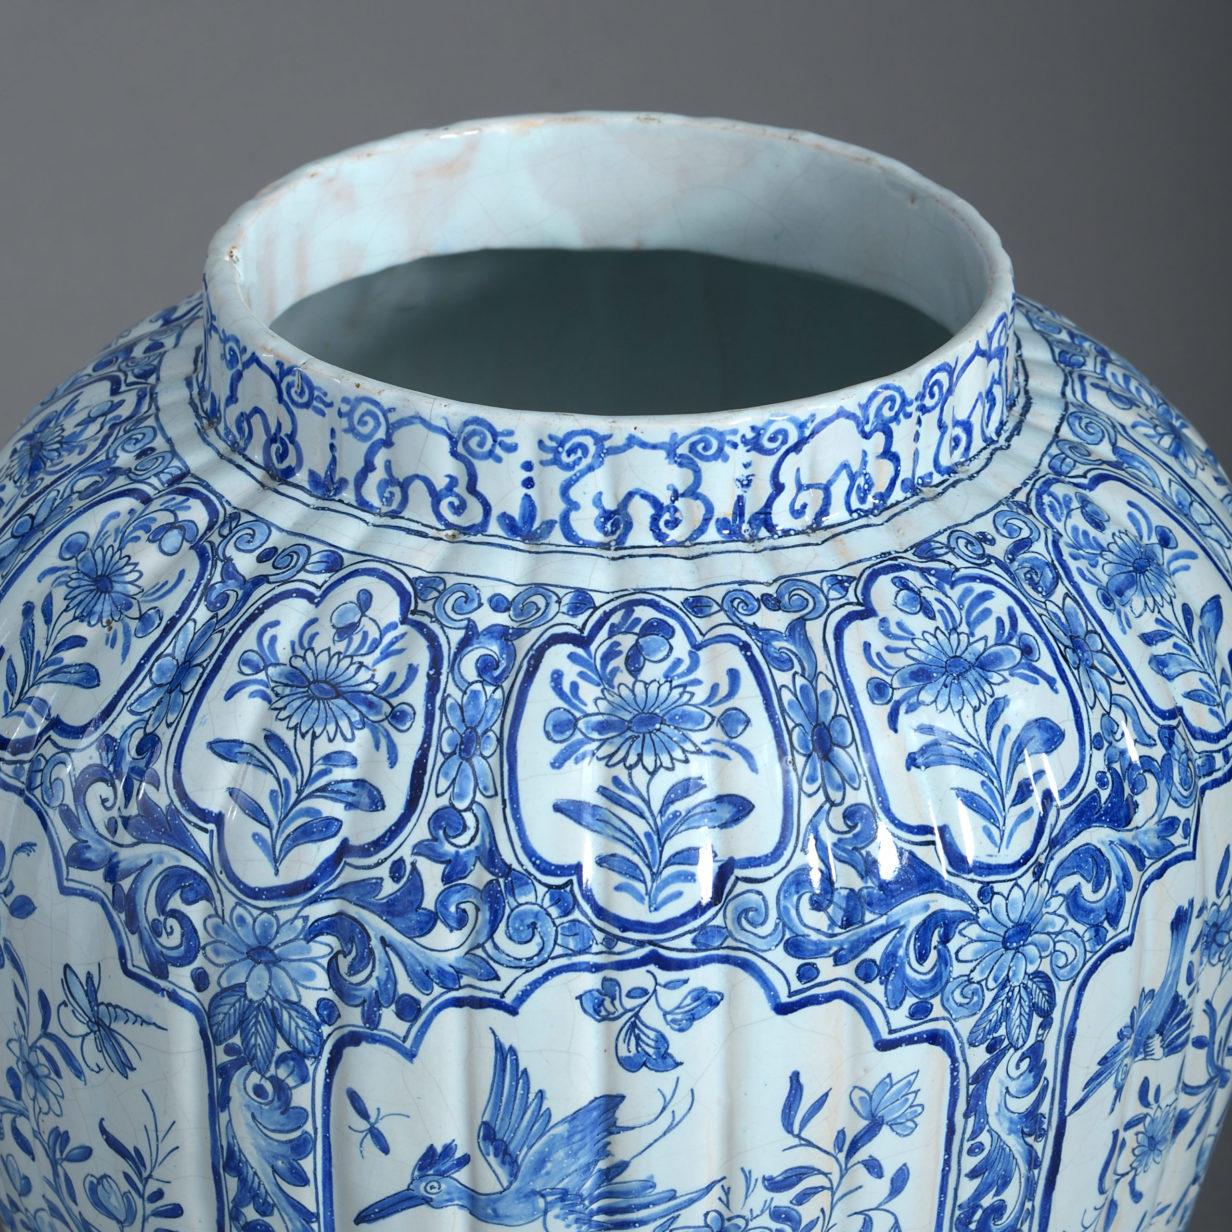 An 18th century blue & white delft pottery vase